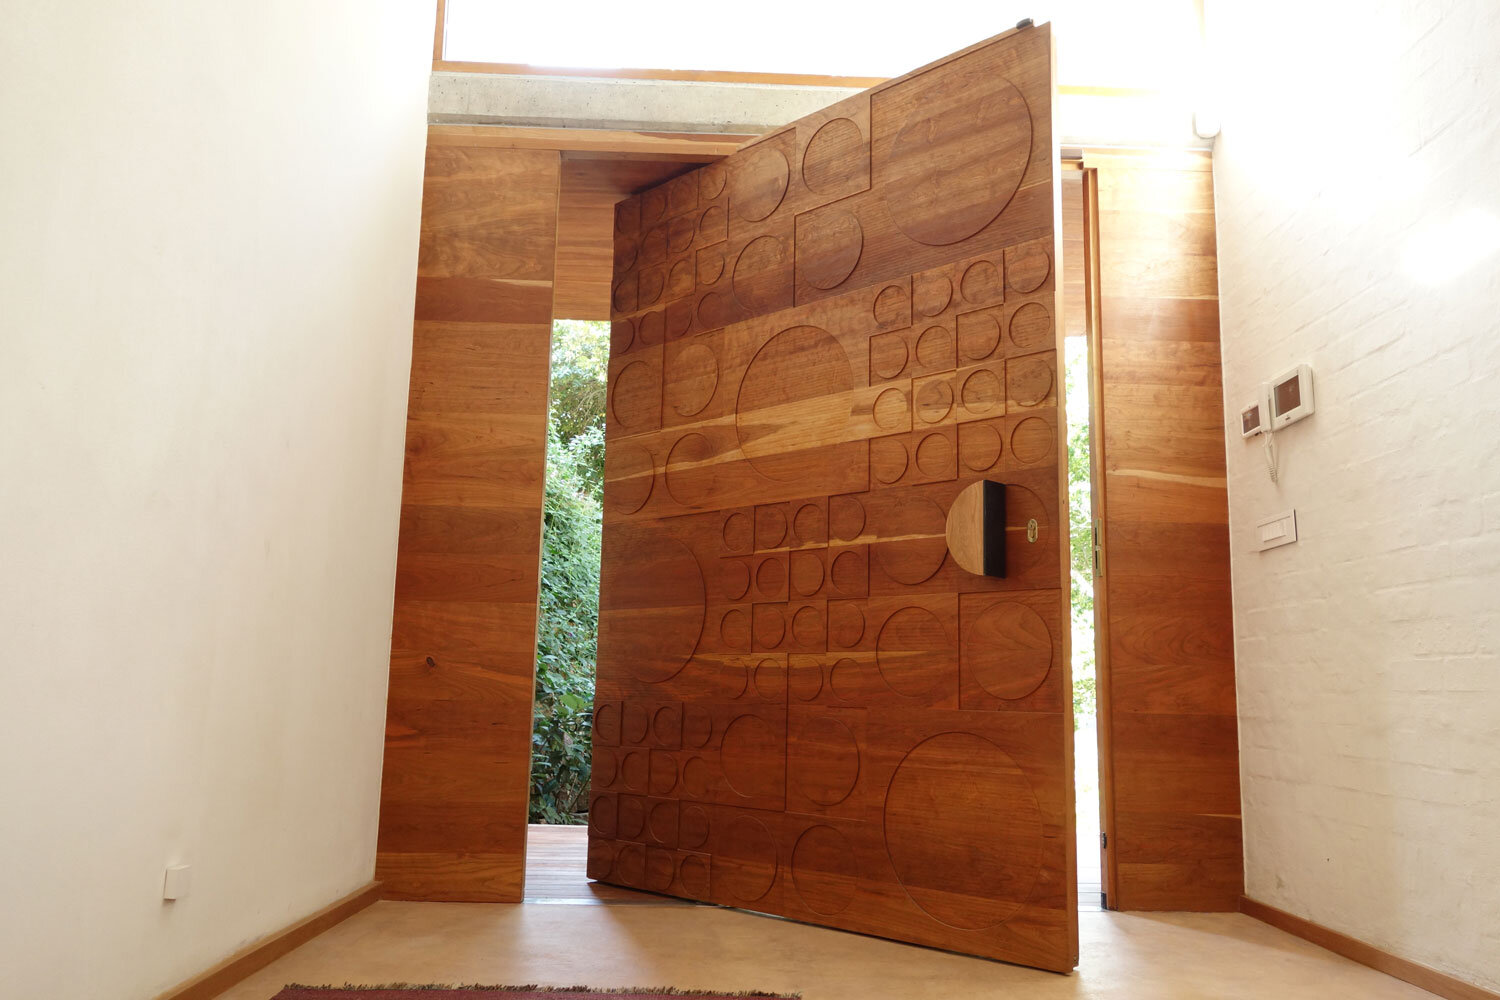 Heavy duty, solid wood pivot door for entrance